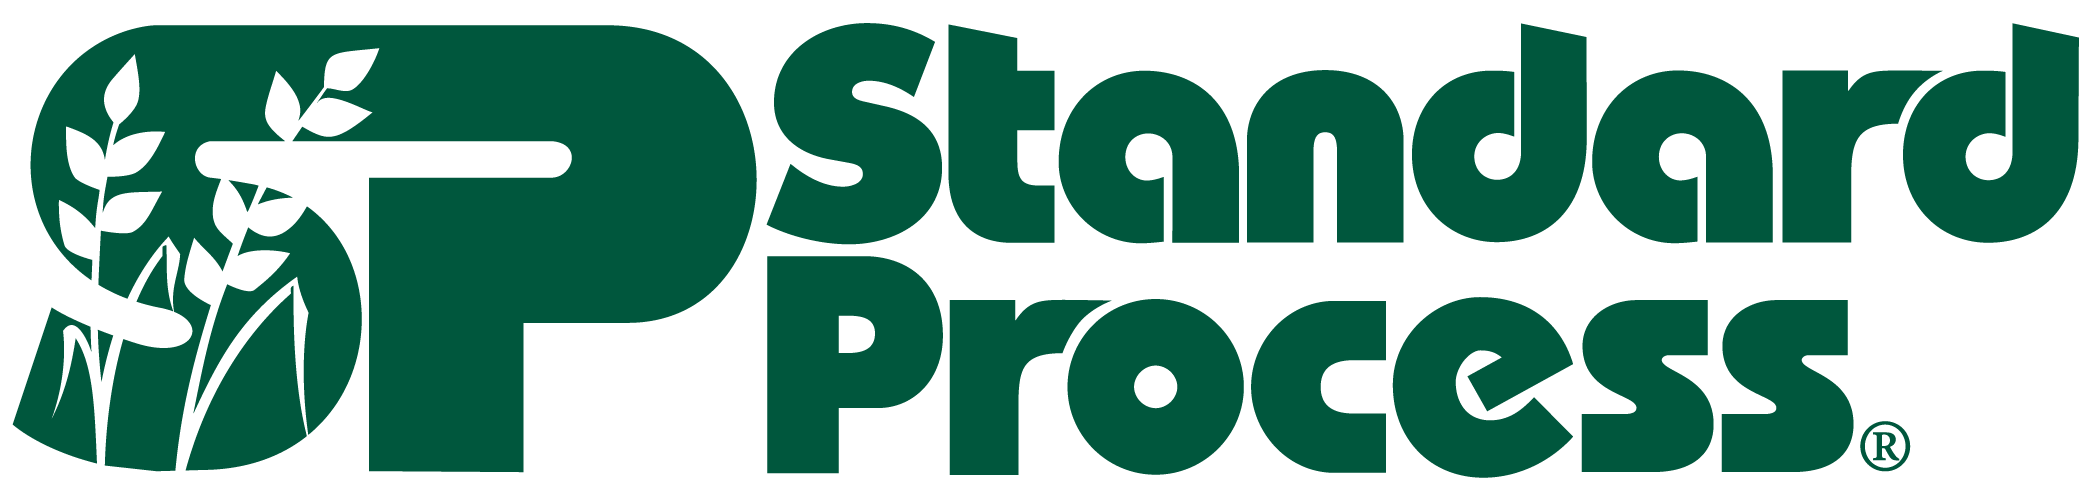 Standard Process Inc logo